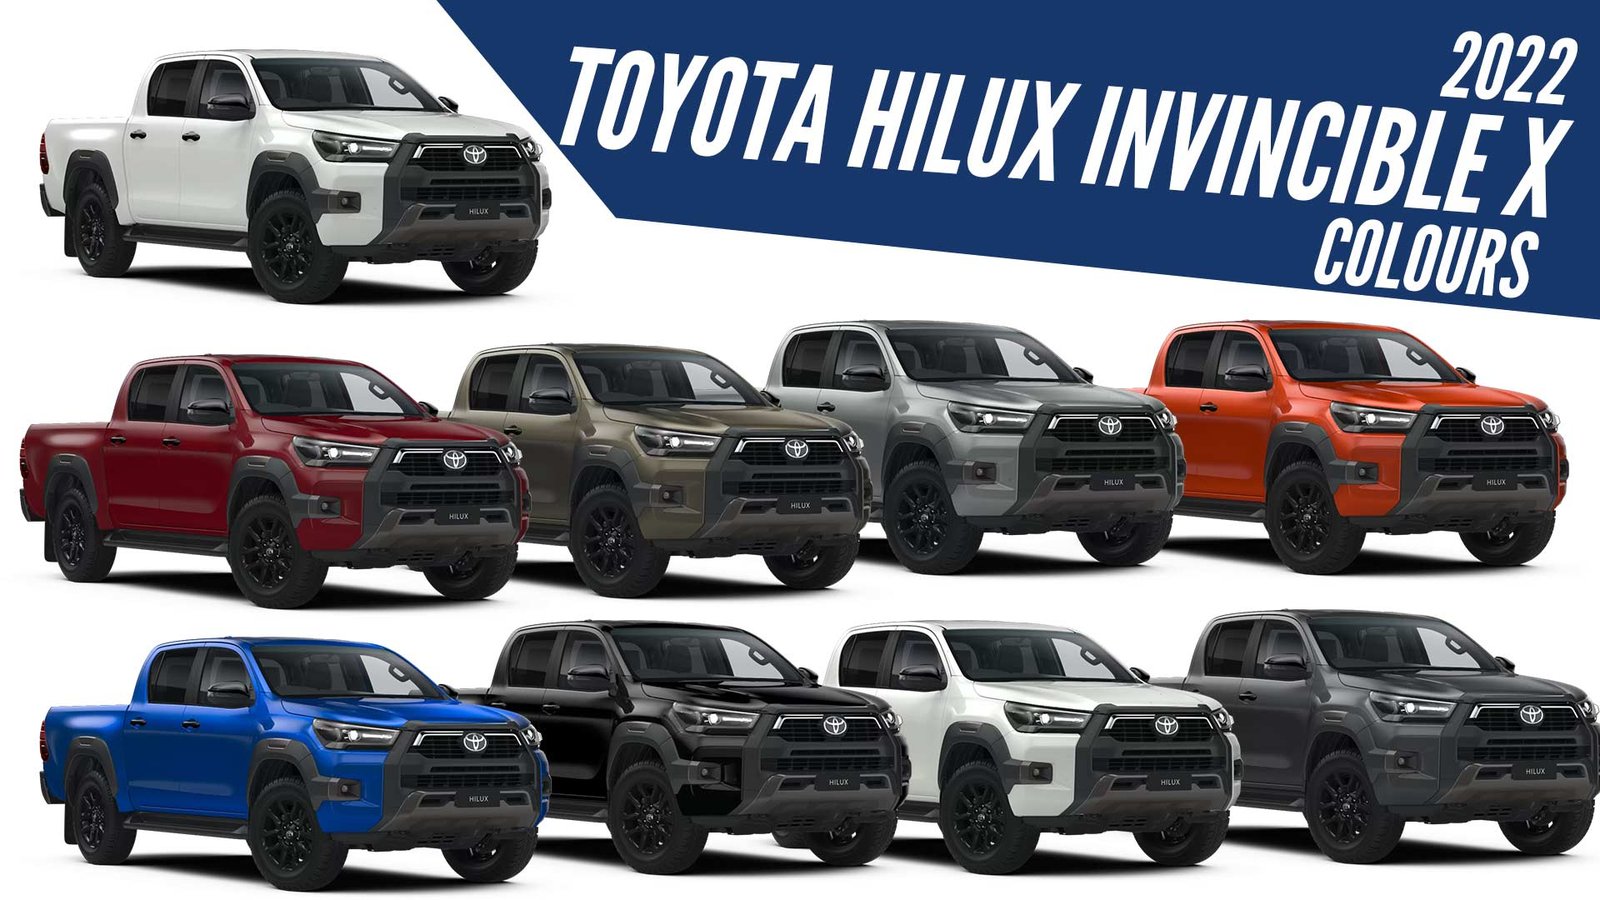 2022 Toyota Hilux Invincible X All Color Options Images AUTOBICS